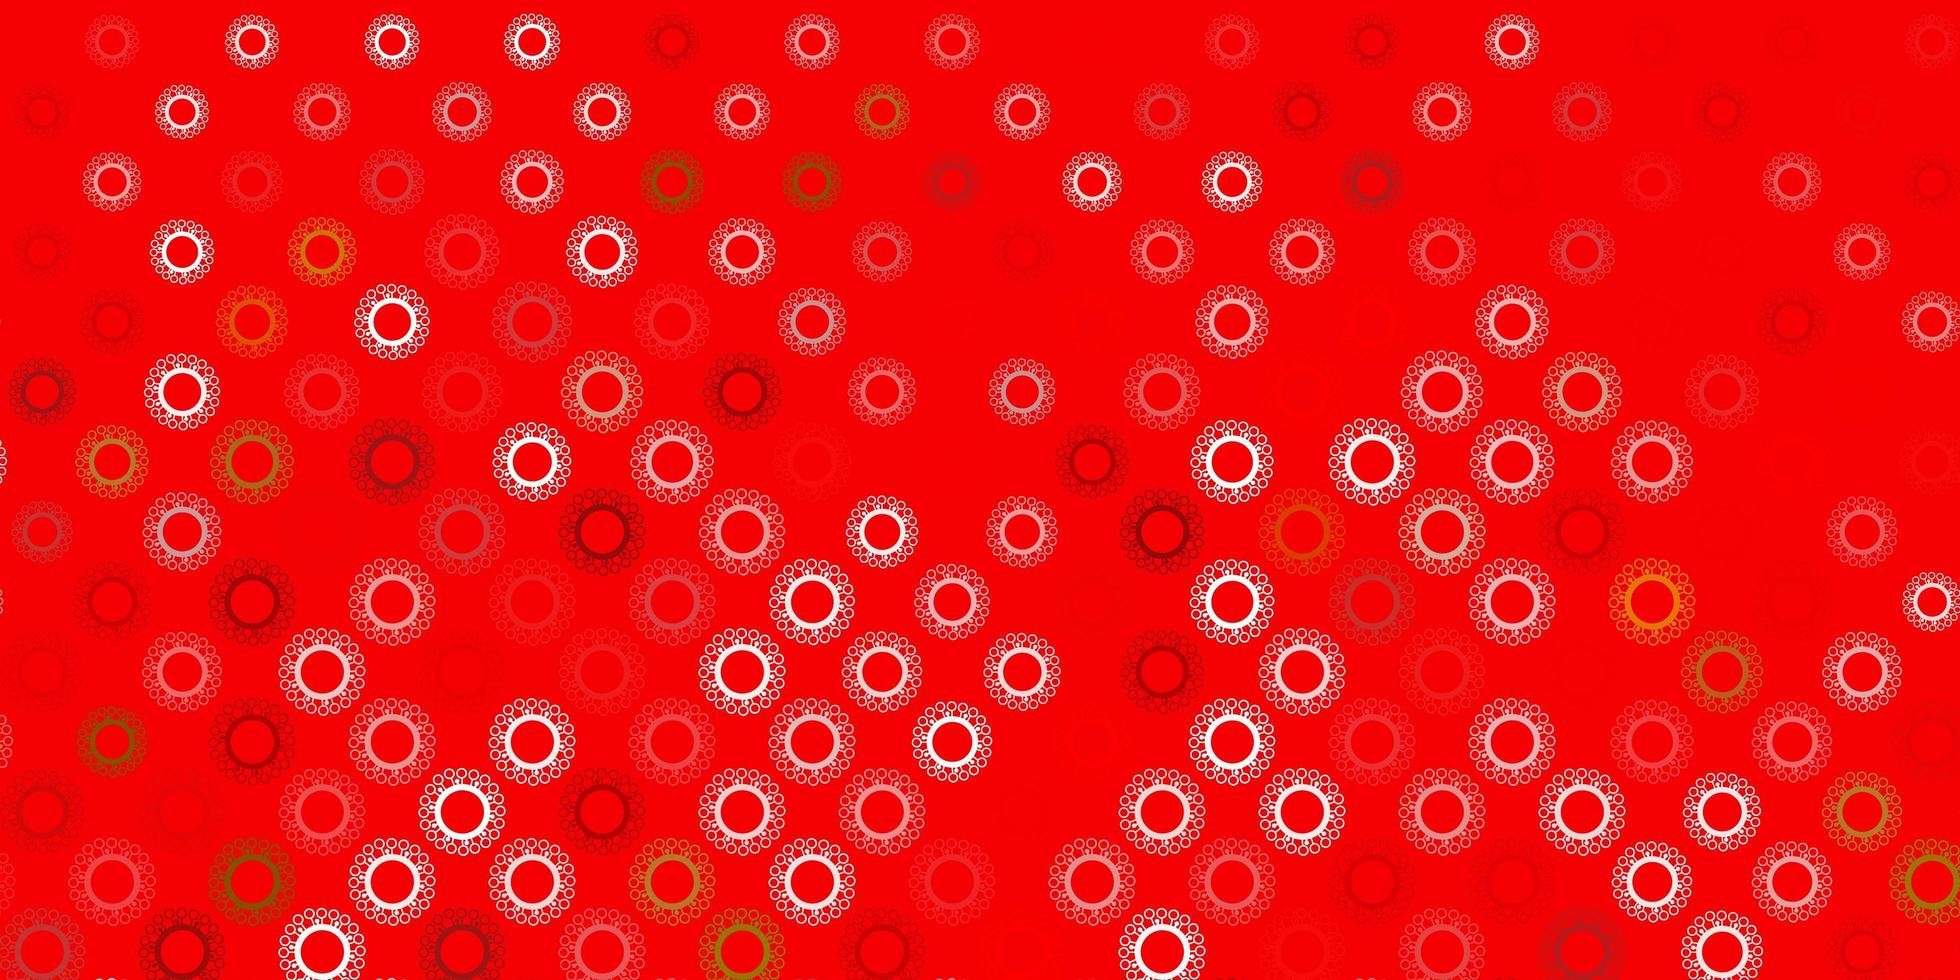 mörkgrönt, rött vektormönster med coronaviruselement. vektor